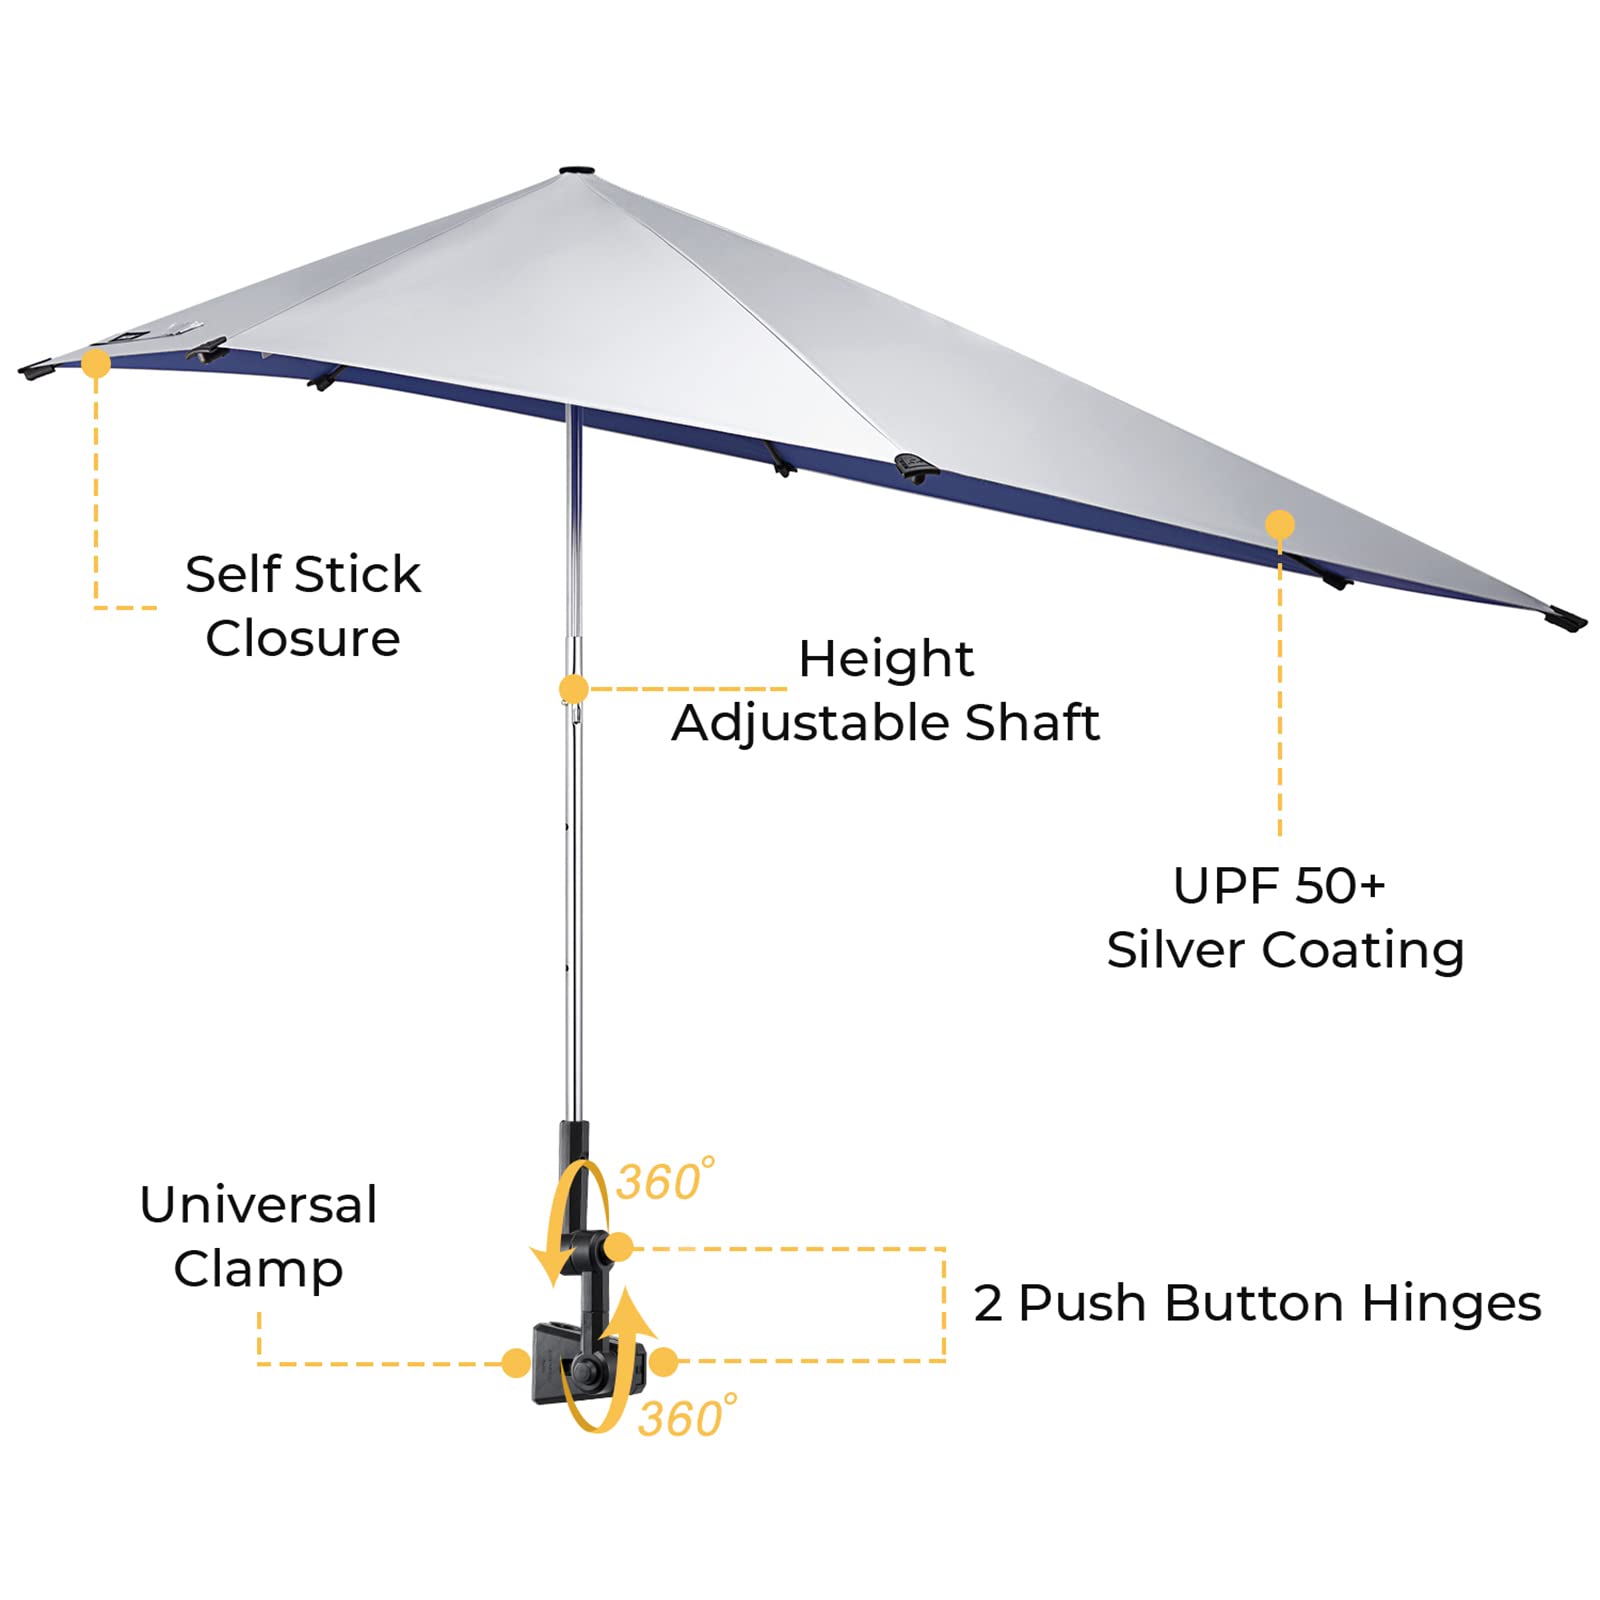 G4Free UPF 50+ Height Adjustable Chair Umbrella with Universal Clamp for Beach Chair, Golf Cart, Wheelchair, Stroller, Bleacher, Patio (Blue)